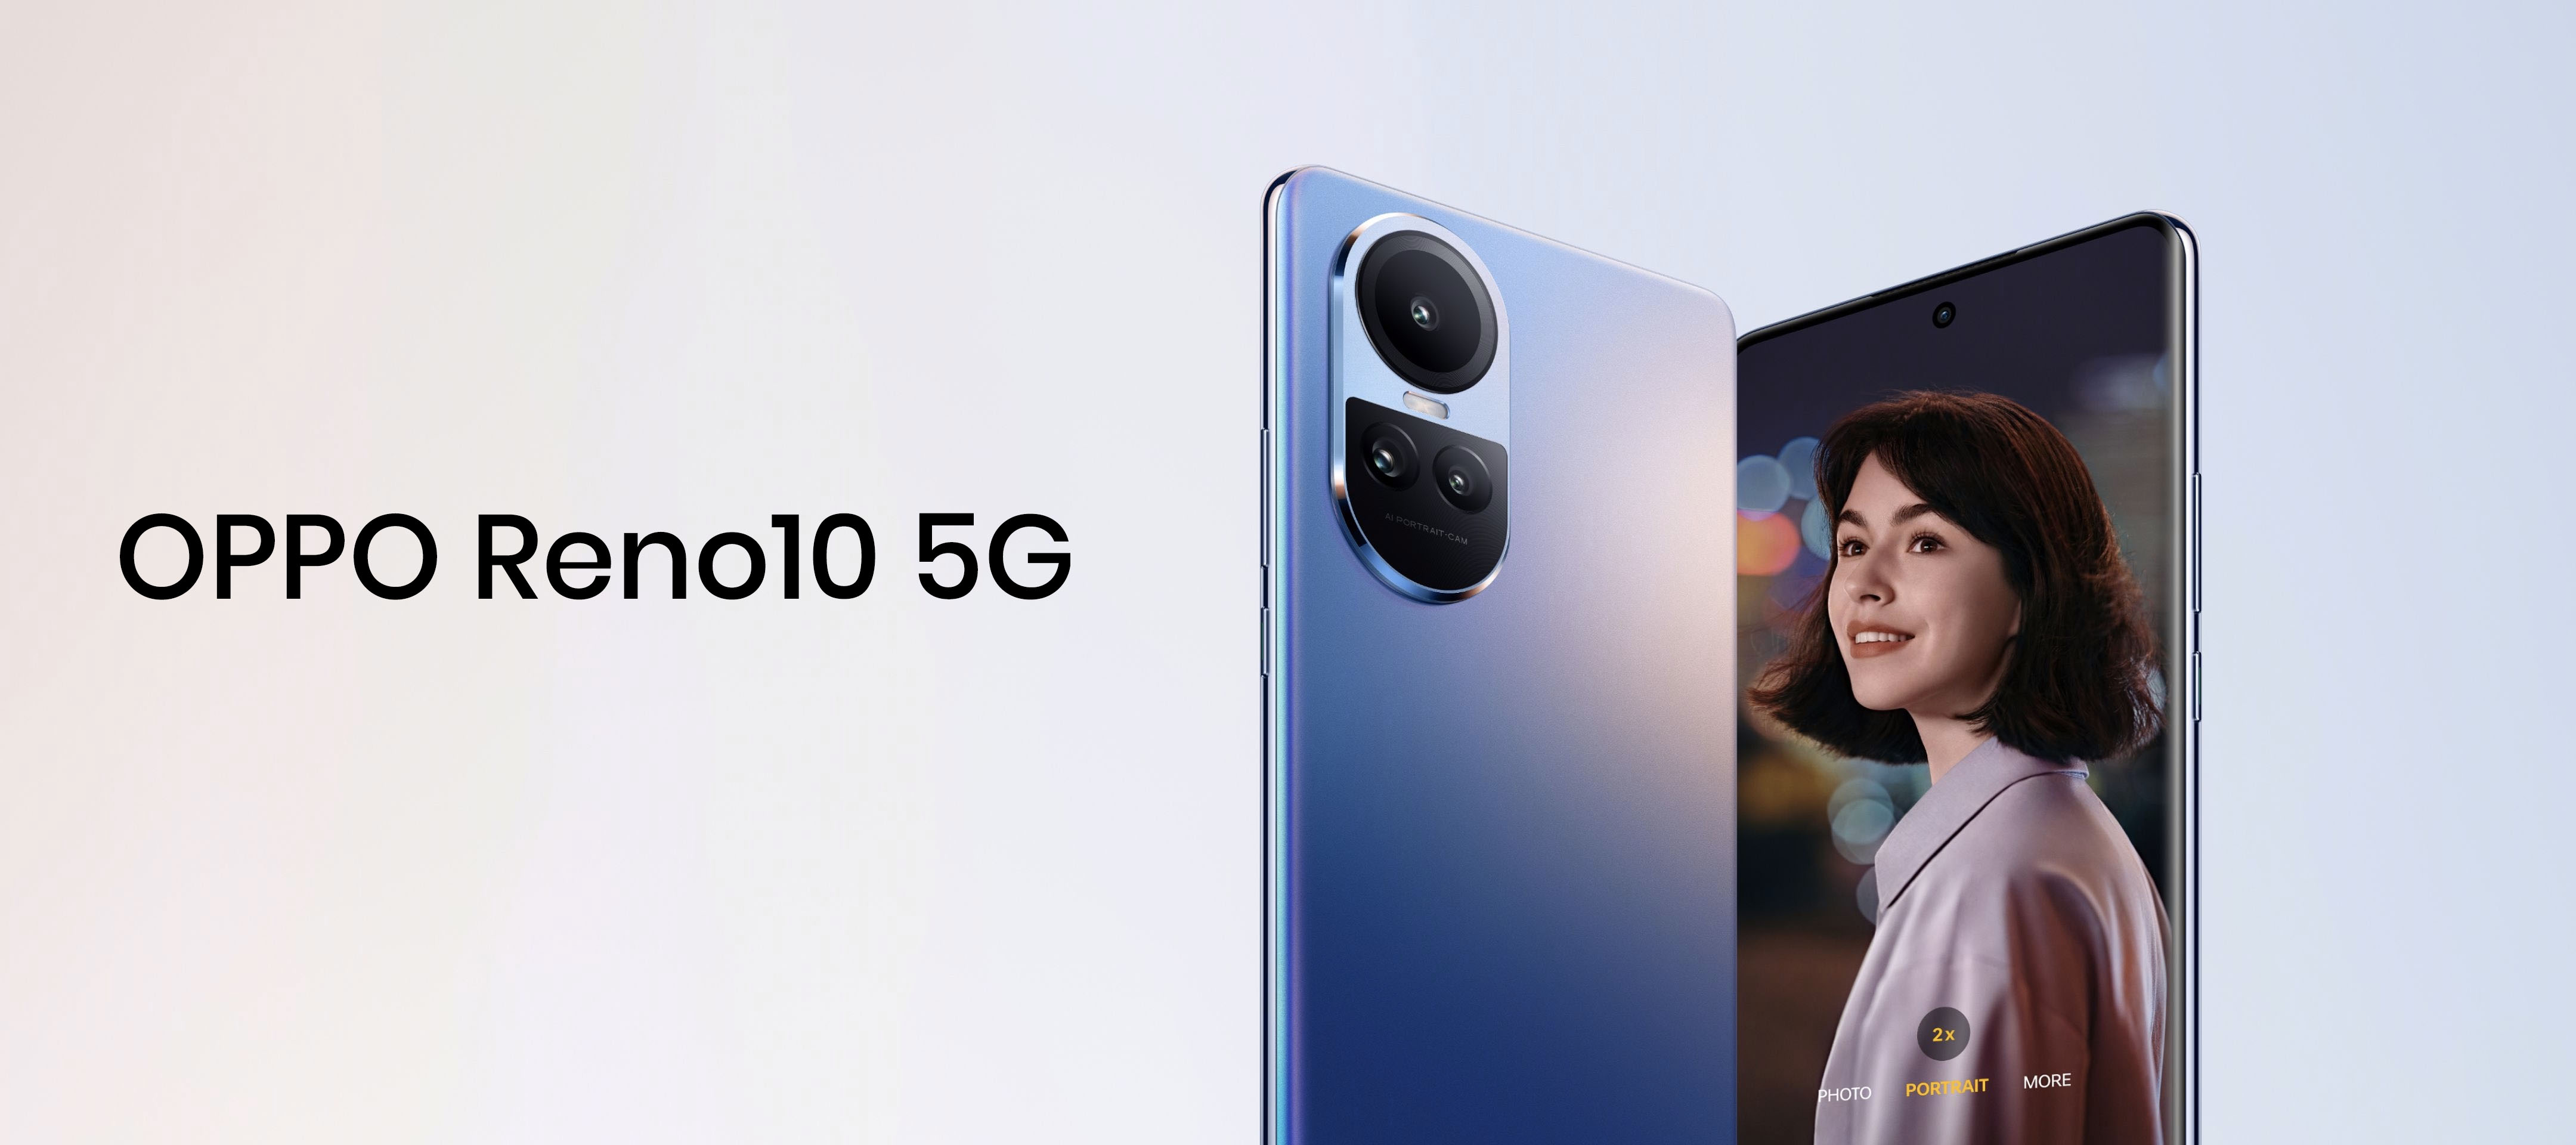 OPPO Reno10 5G: A stylish mid-range phone launching soon in Nepal